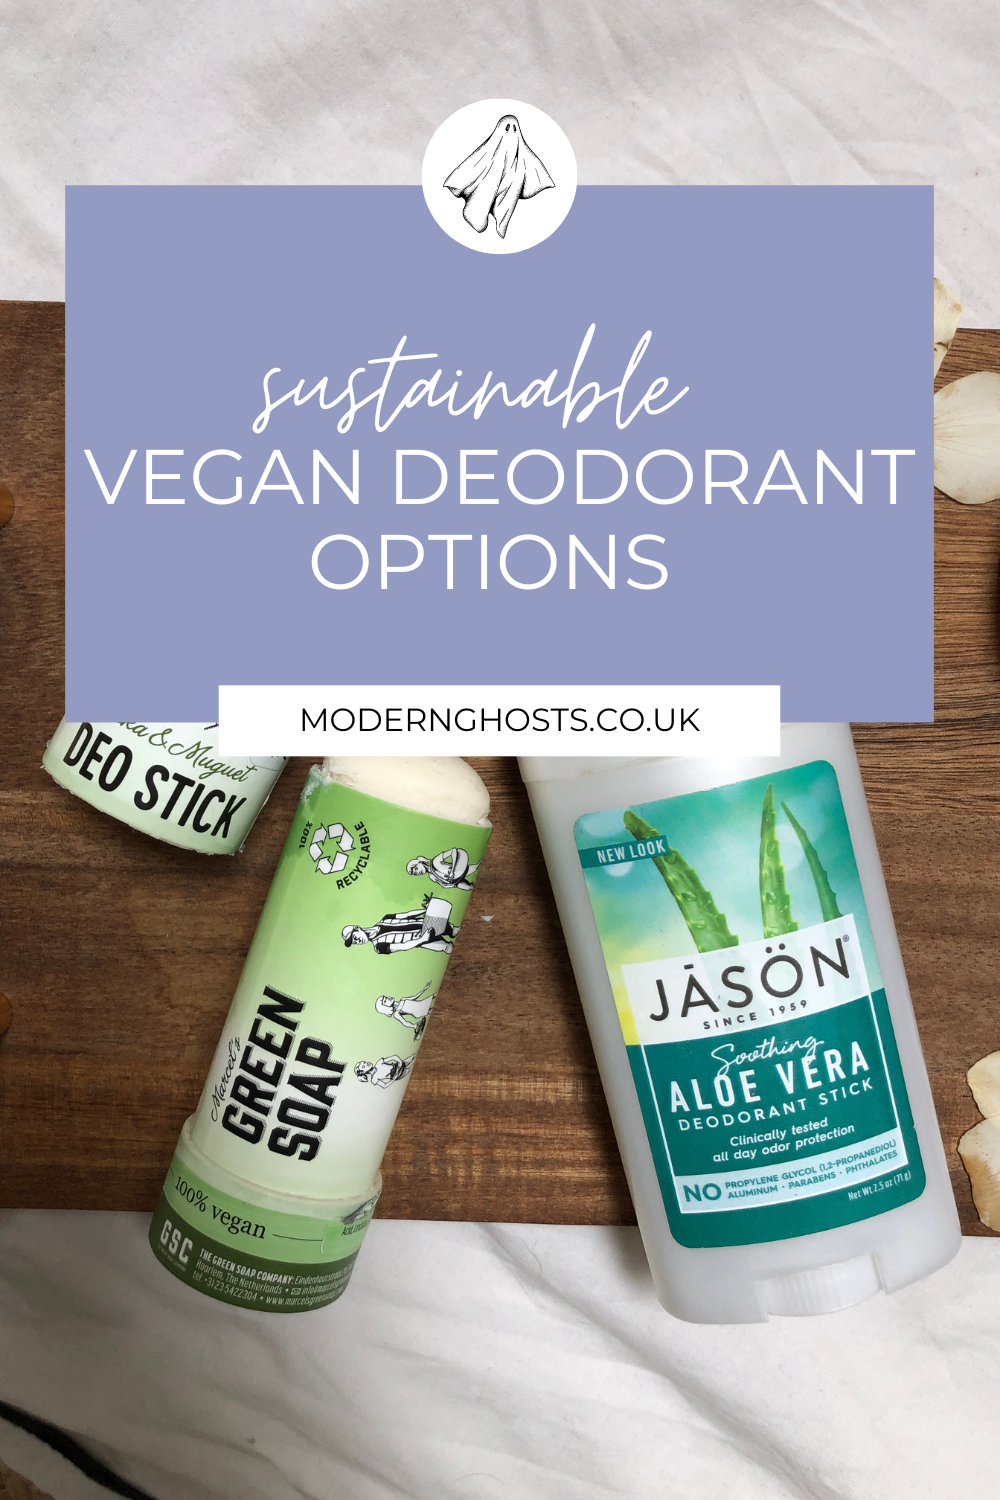 Sustainable vegan deodorant options in the UK